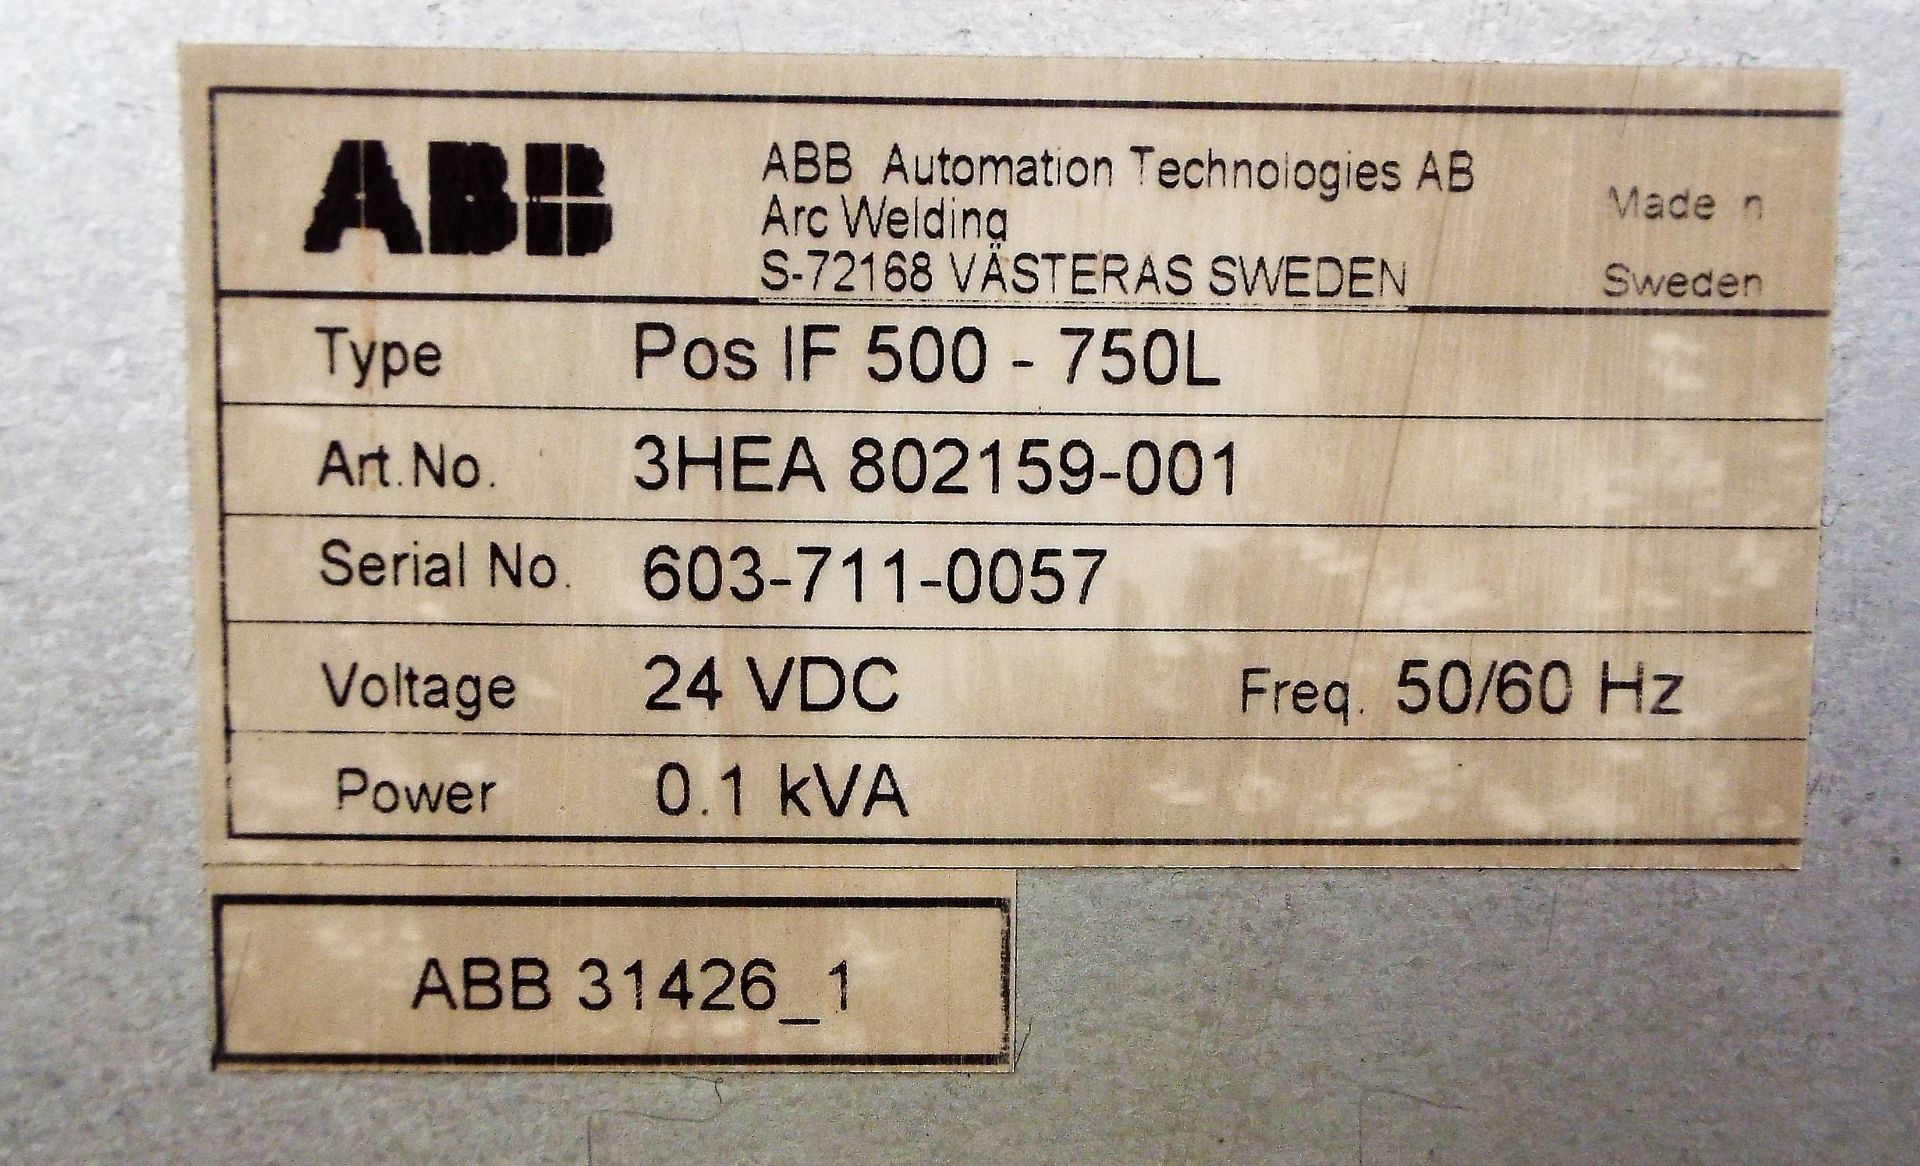 ABB-IRB-2400L-IRC5 Mig Welding Robot Set - Image 8 of 32